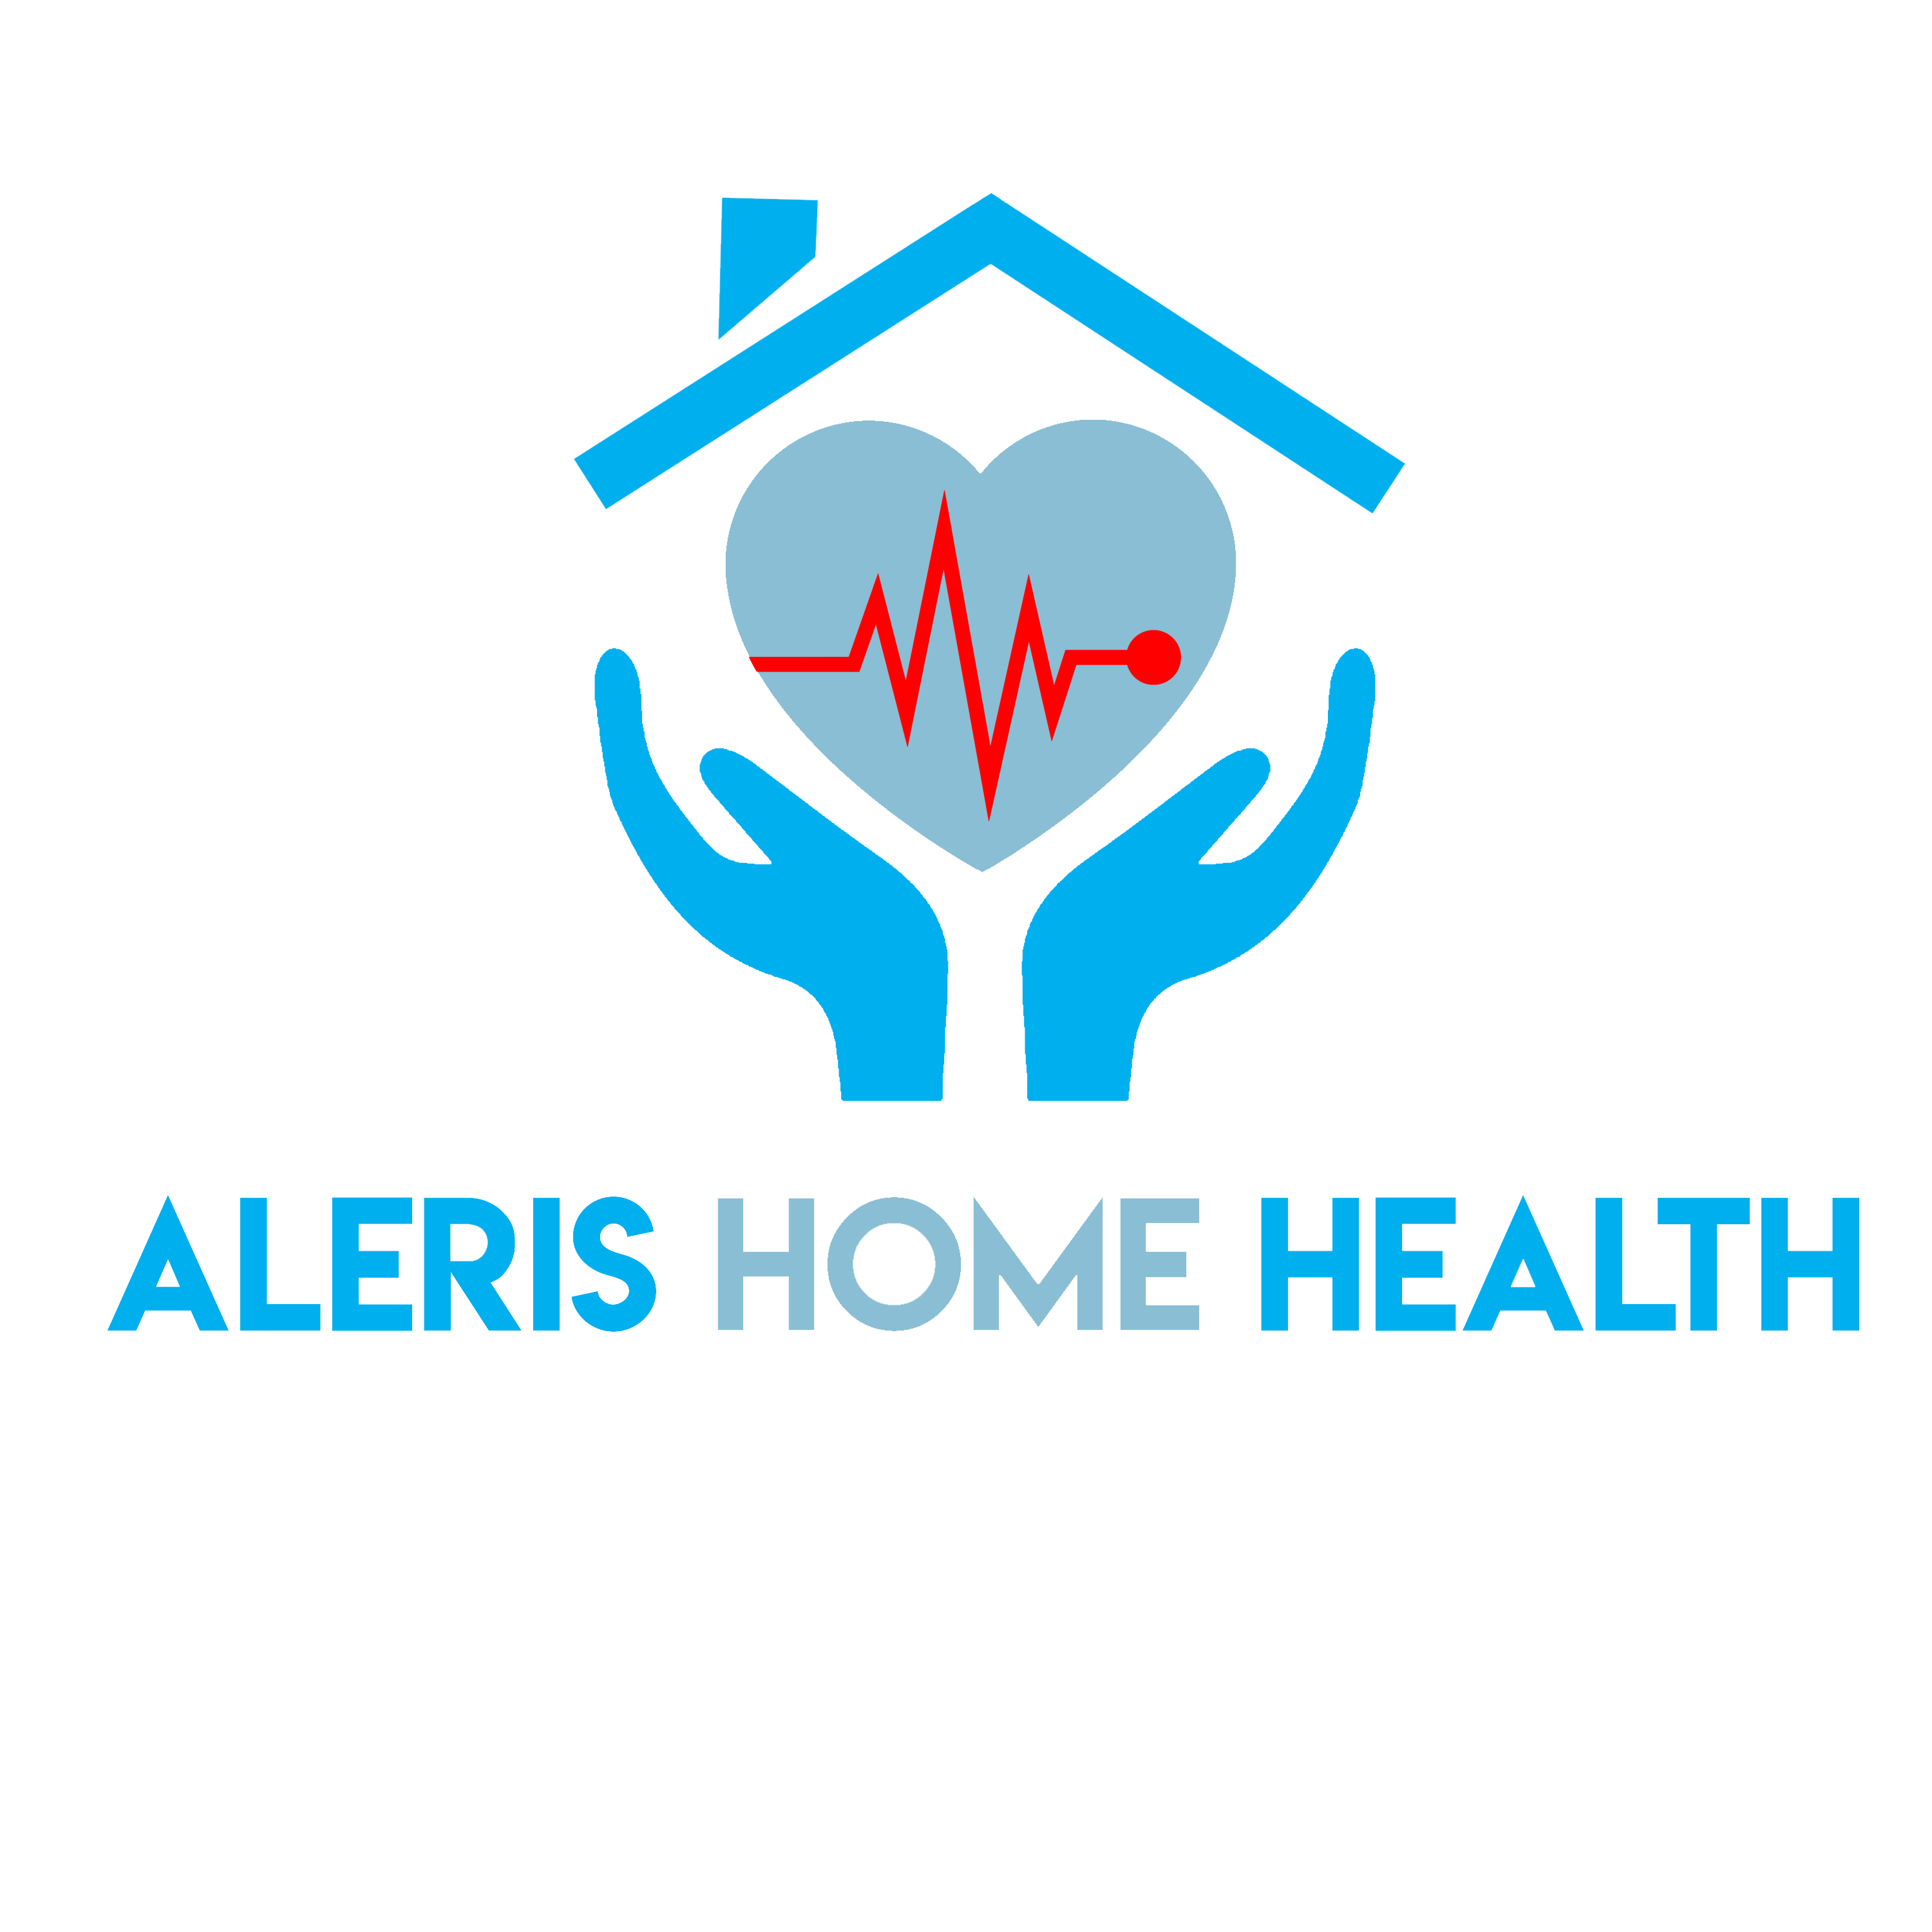  Aleris Home Health Care